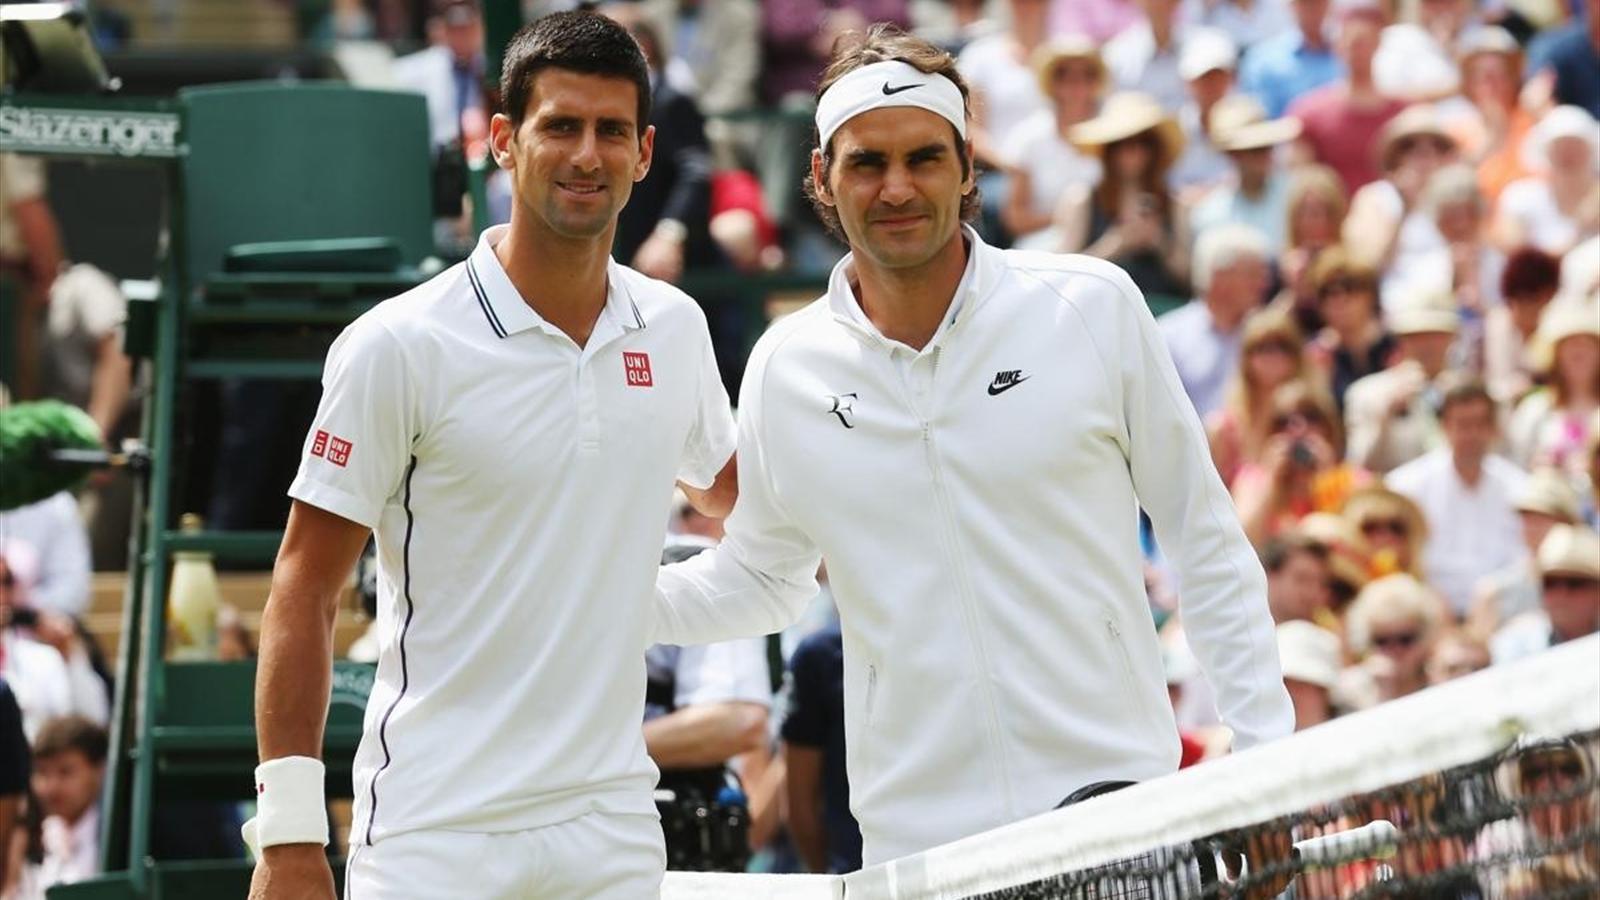 Novak Djokovic and Roger Federer on those Wimbledon courts. Movie